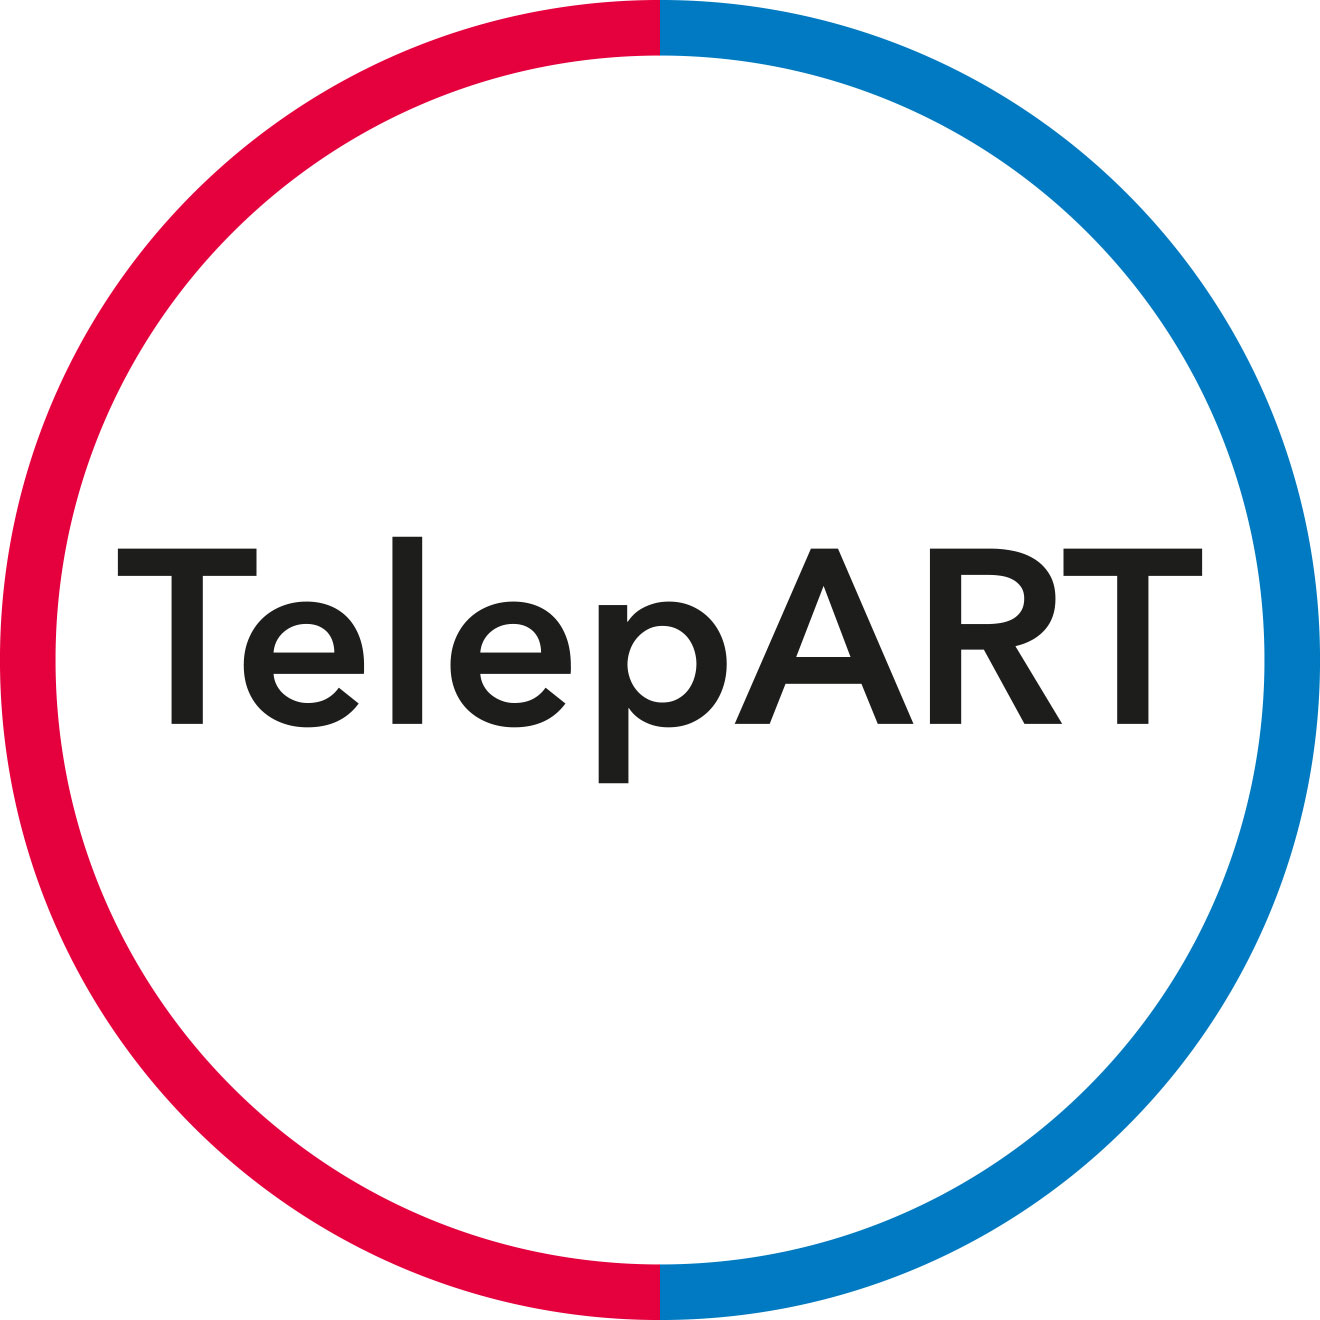 TelepART_logo_web.jpg